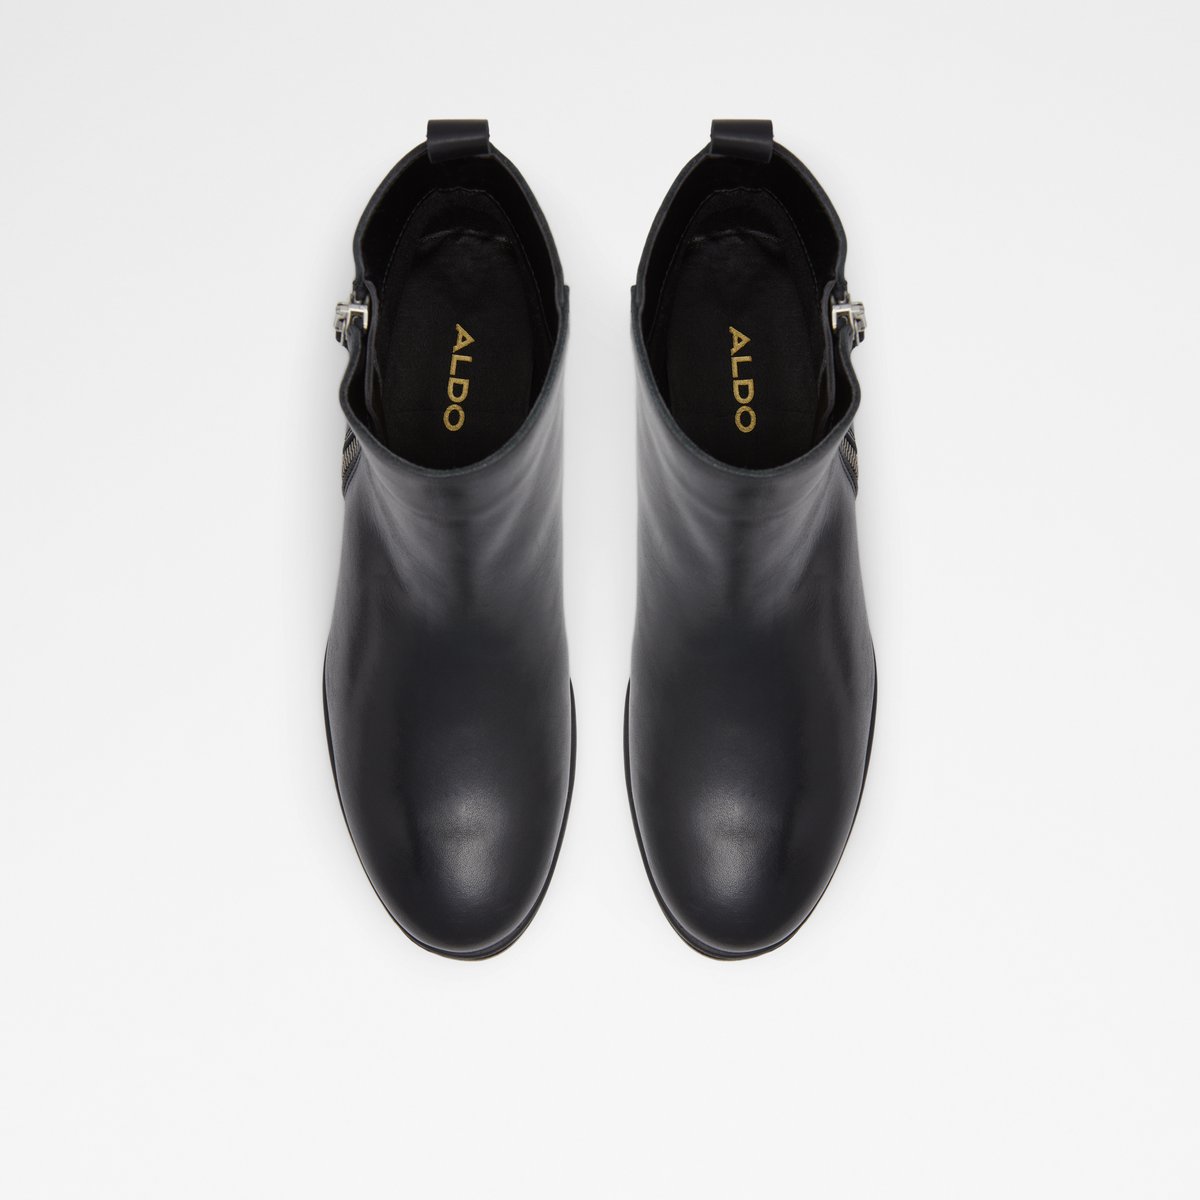 Brand New Women Black Ankle Rain Boots Twin V gore Waterproof Size 6-10 